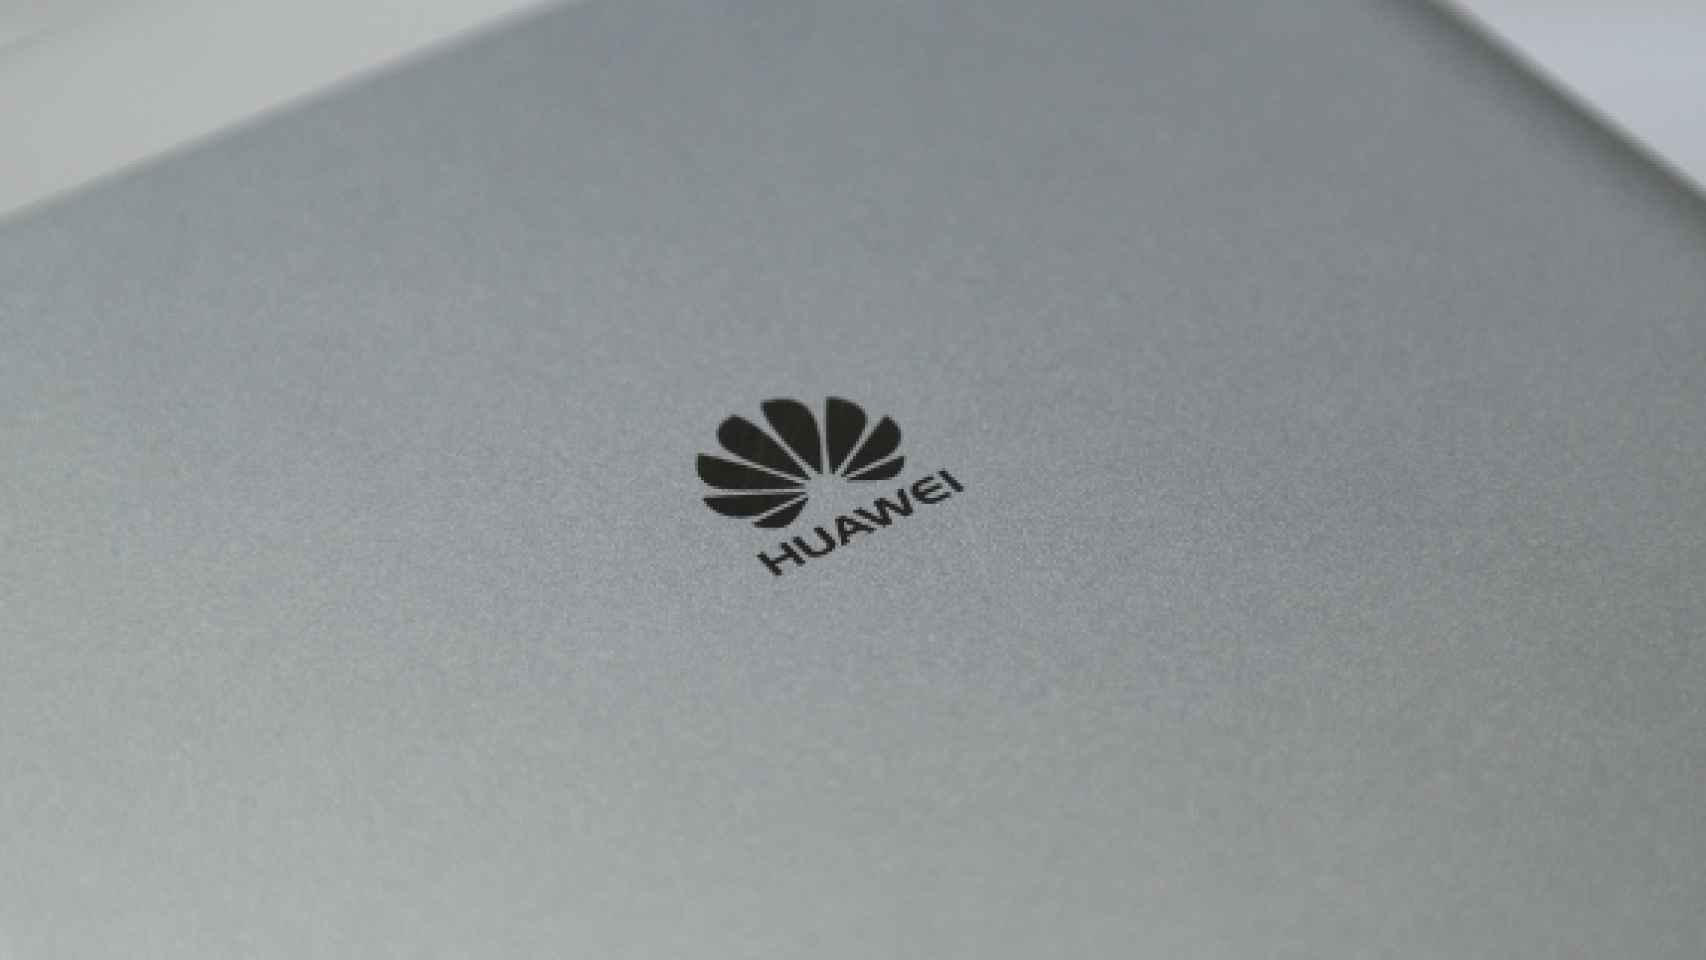 Huawei Ascend P8 se acerca: pantalla de 5.2″ FullHD y acabados Premium